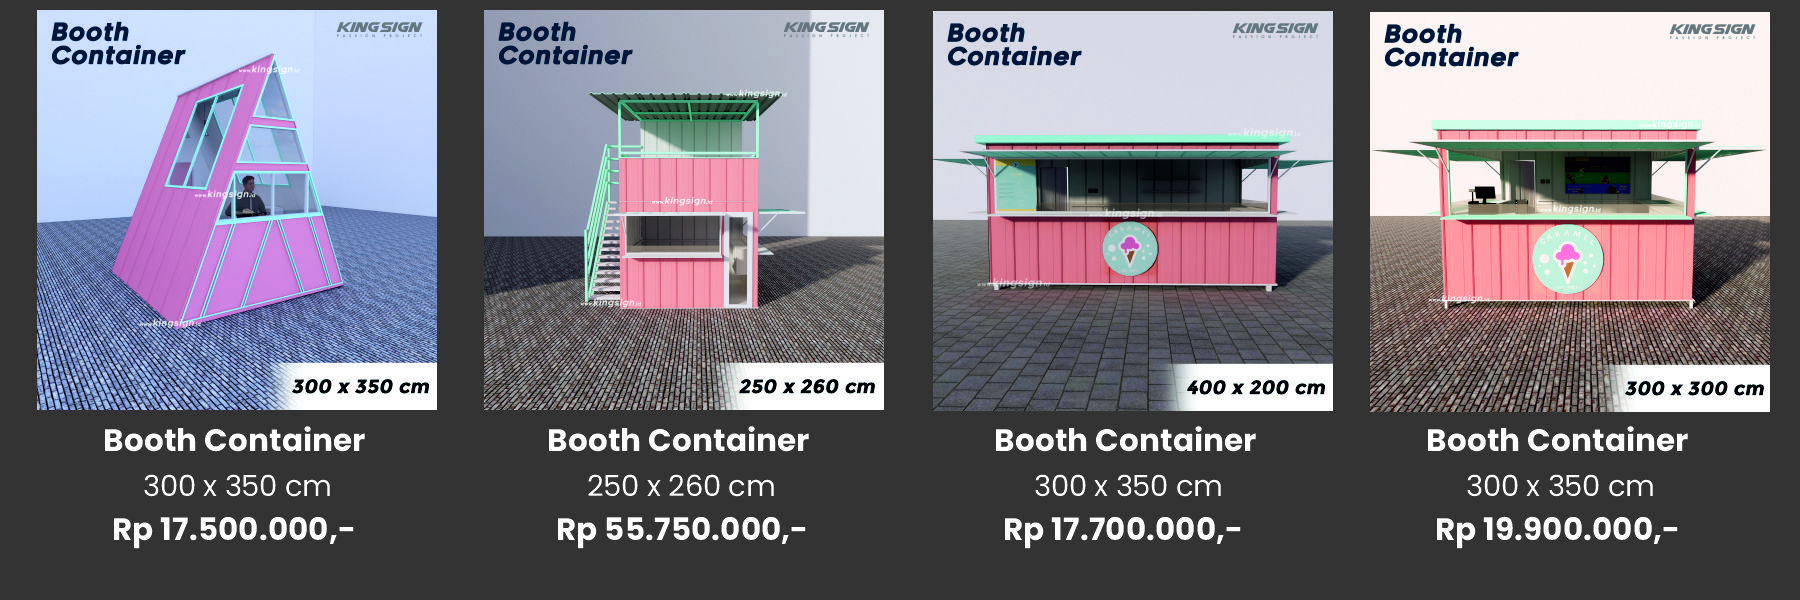 harga jual booth semi container bekas kontainer portabel food jakarta bogor depok tangerang selatan bekasi bandung bsd bintaro bandung